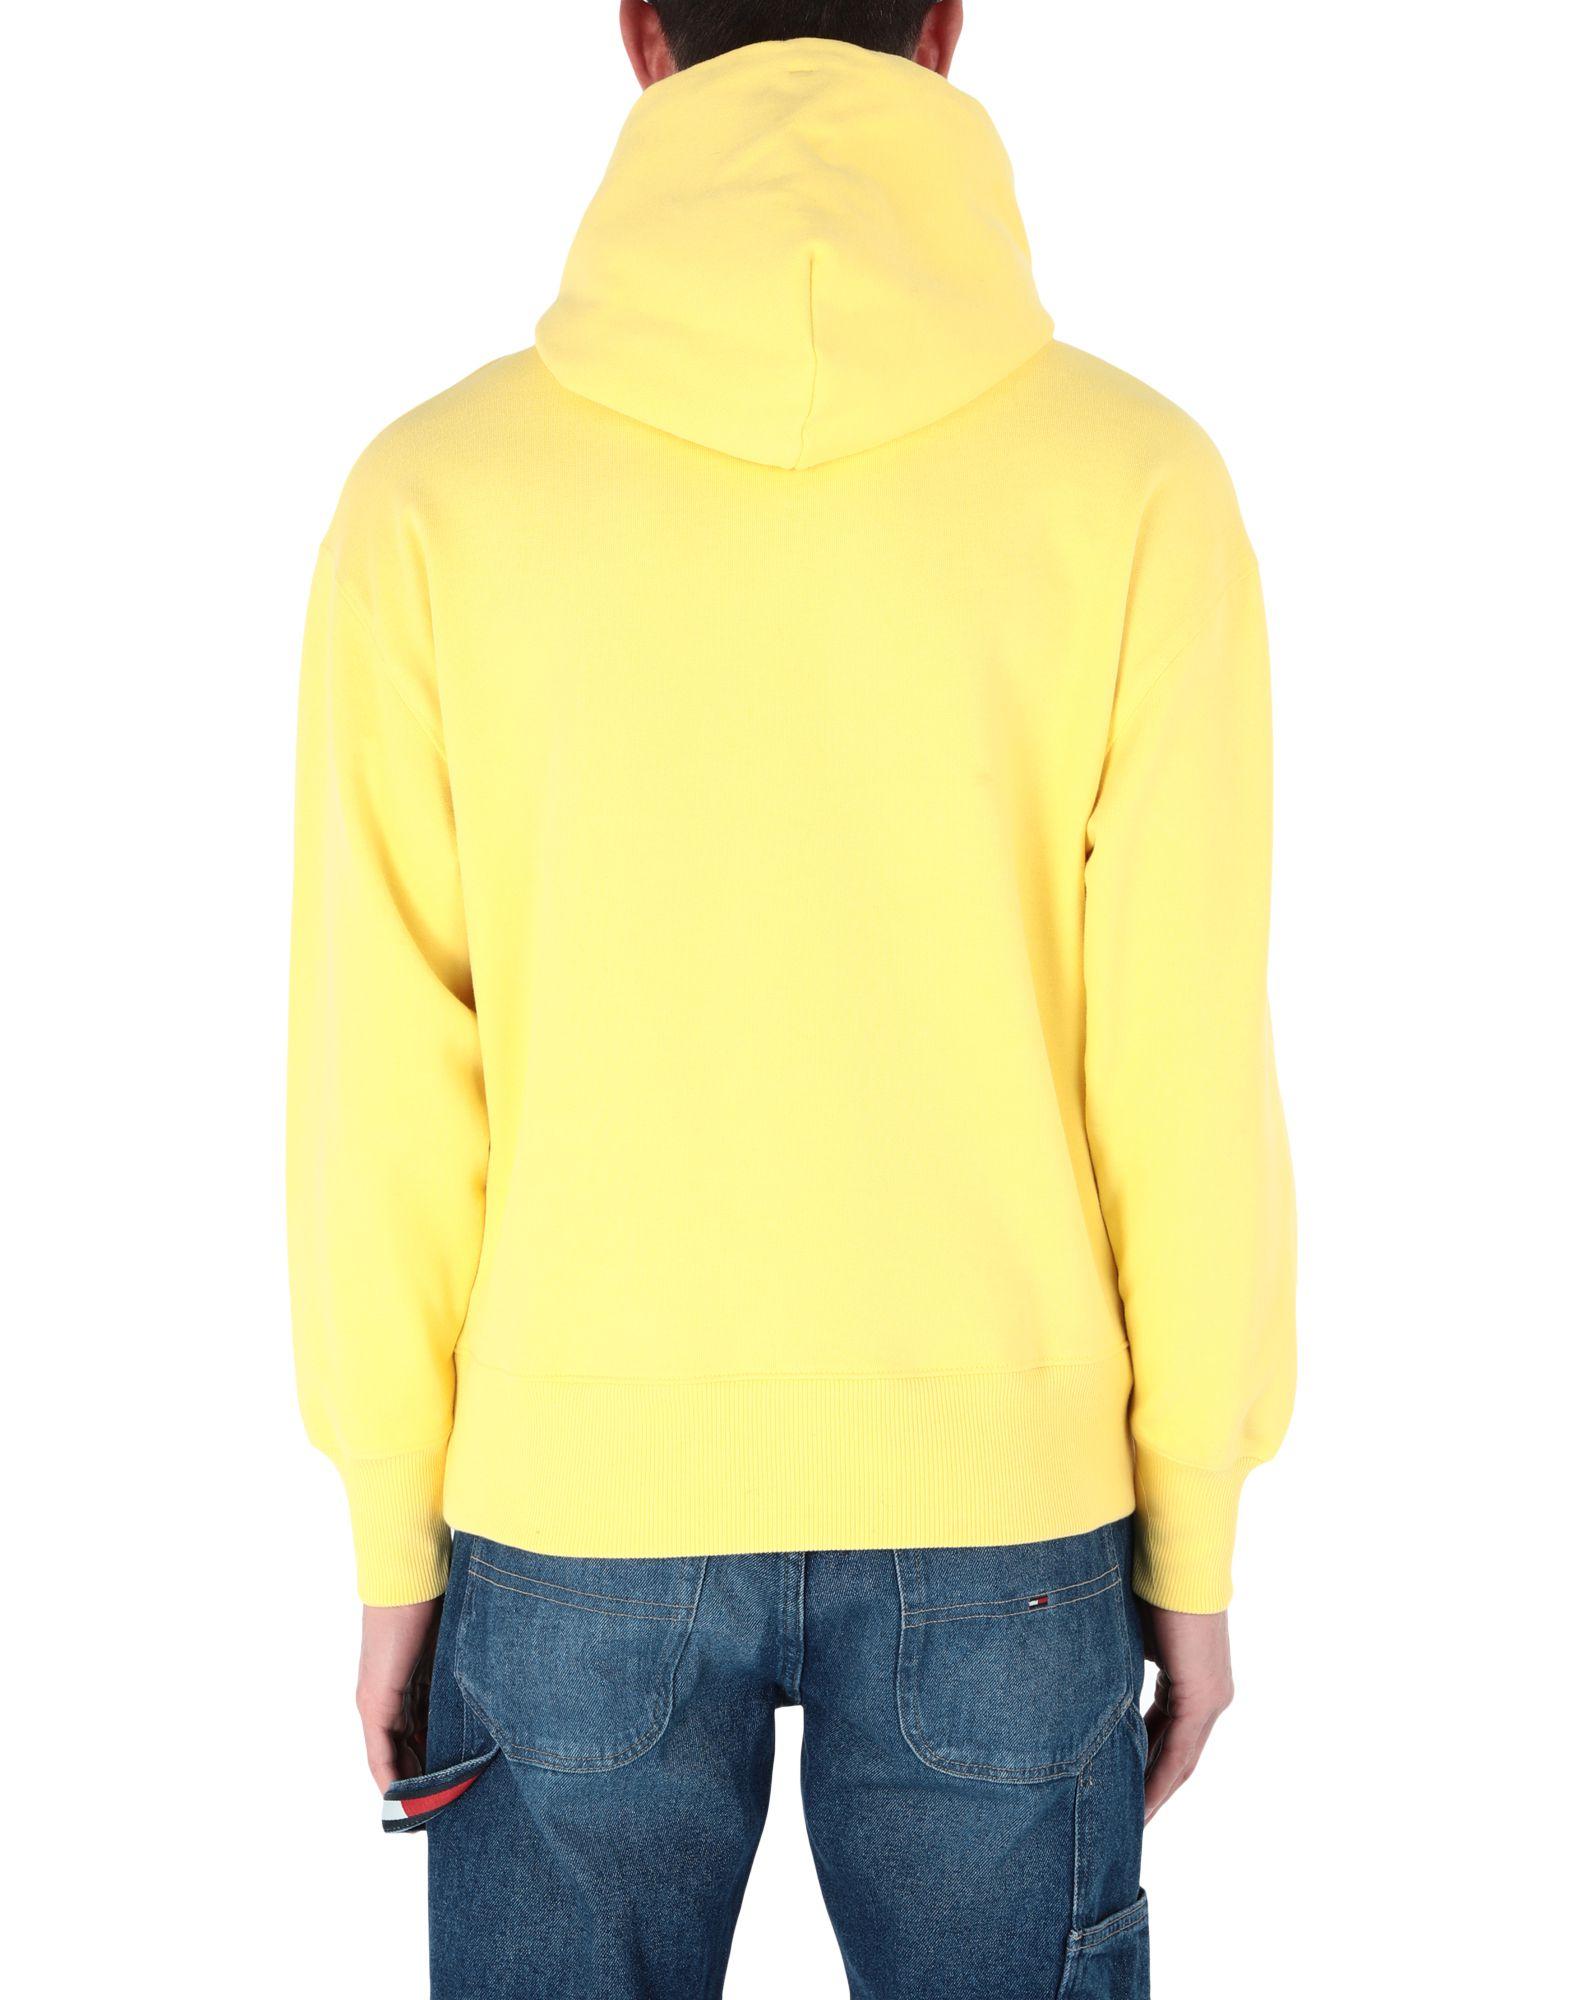 Tommy Hilfiger Denim Logo Hooded Sweatshirt in Yellow for Men | Lyst